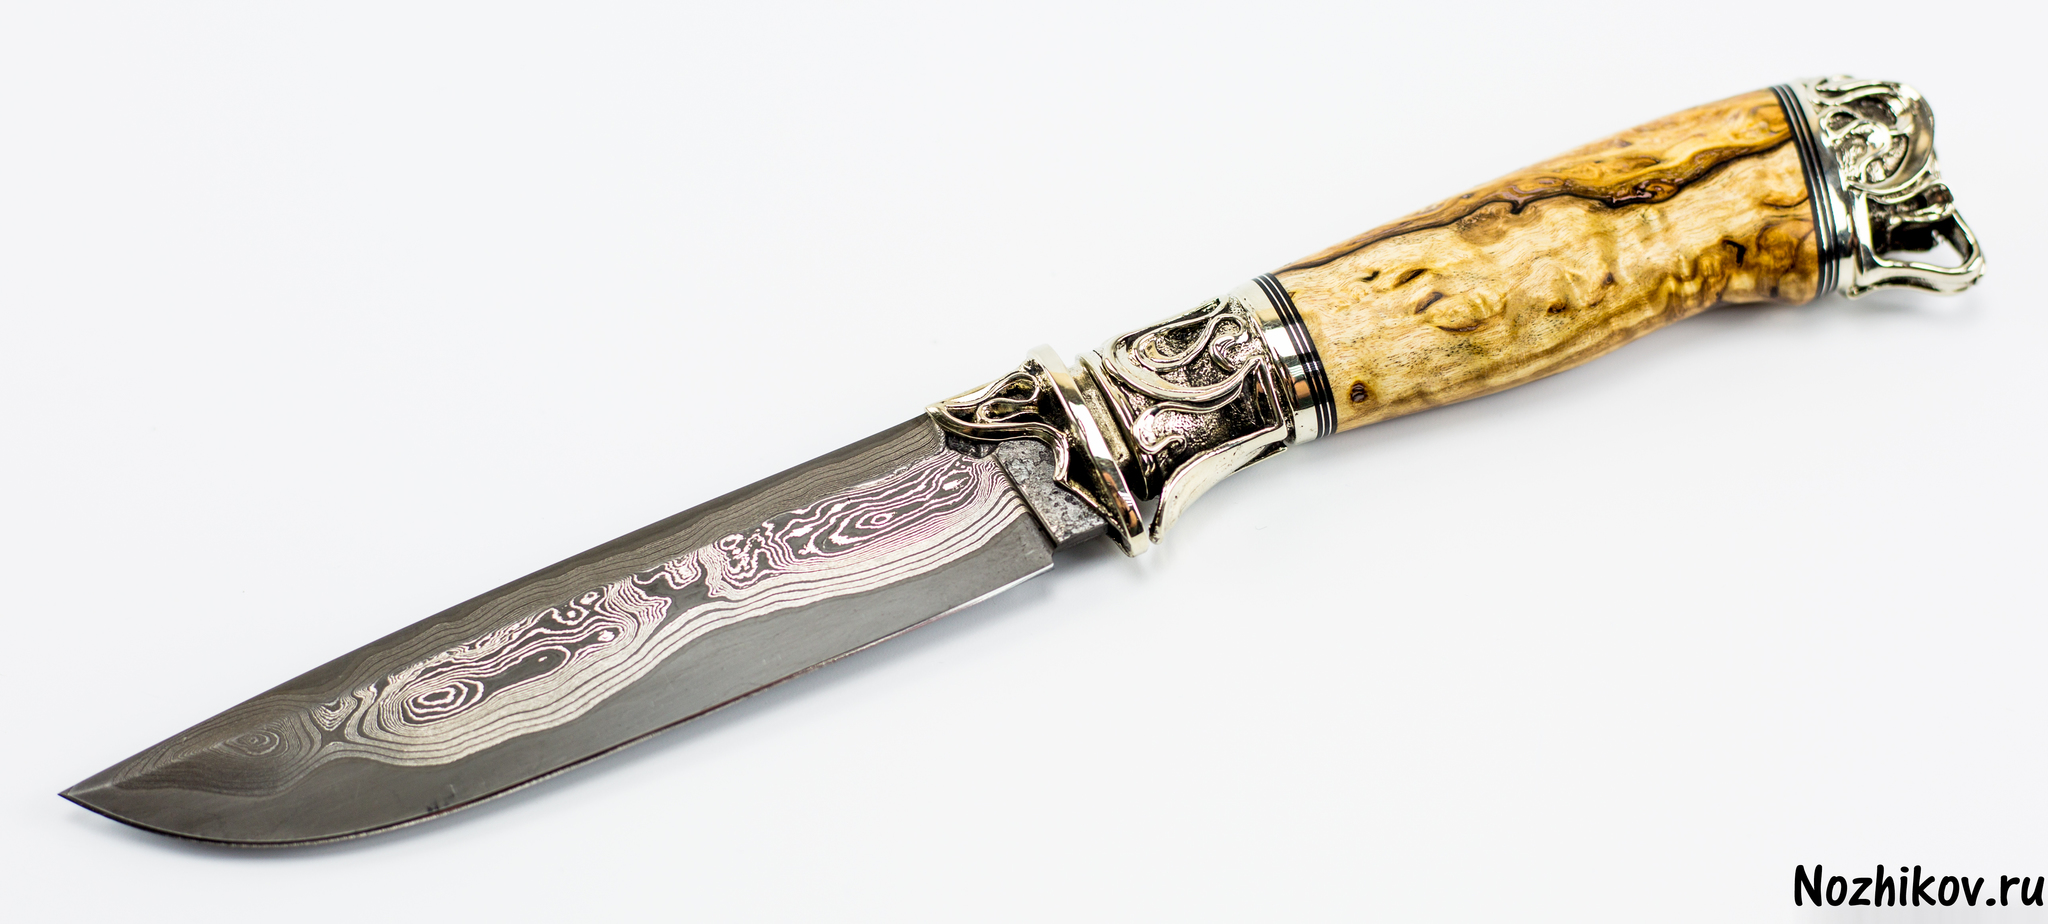 Нож Подарочный №52 из Ламината с никелем, от Приказчикова